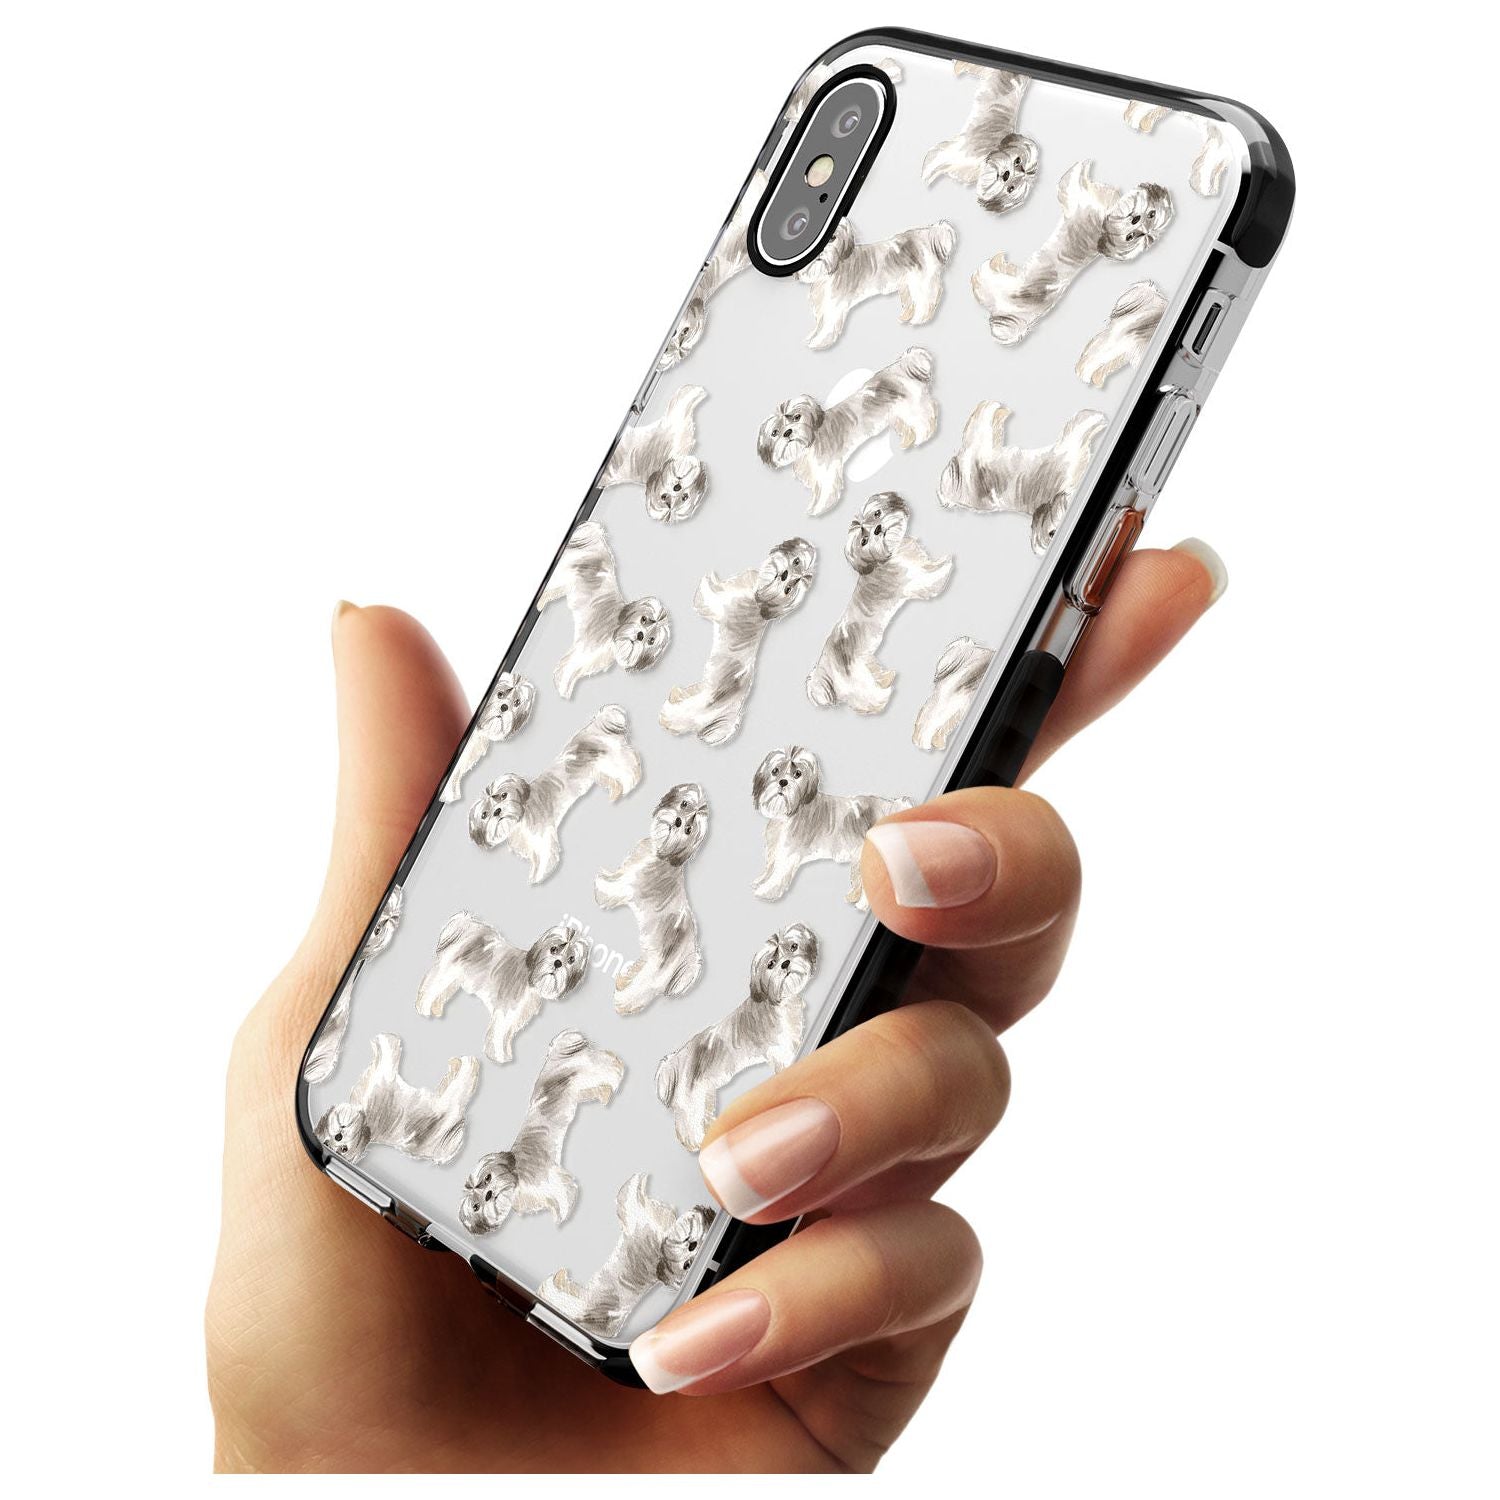 Shih tzu (Short Hair) Watercolour Dog Pattern Black Impact Phone Case for iPhone X XS Max XR